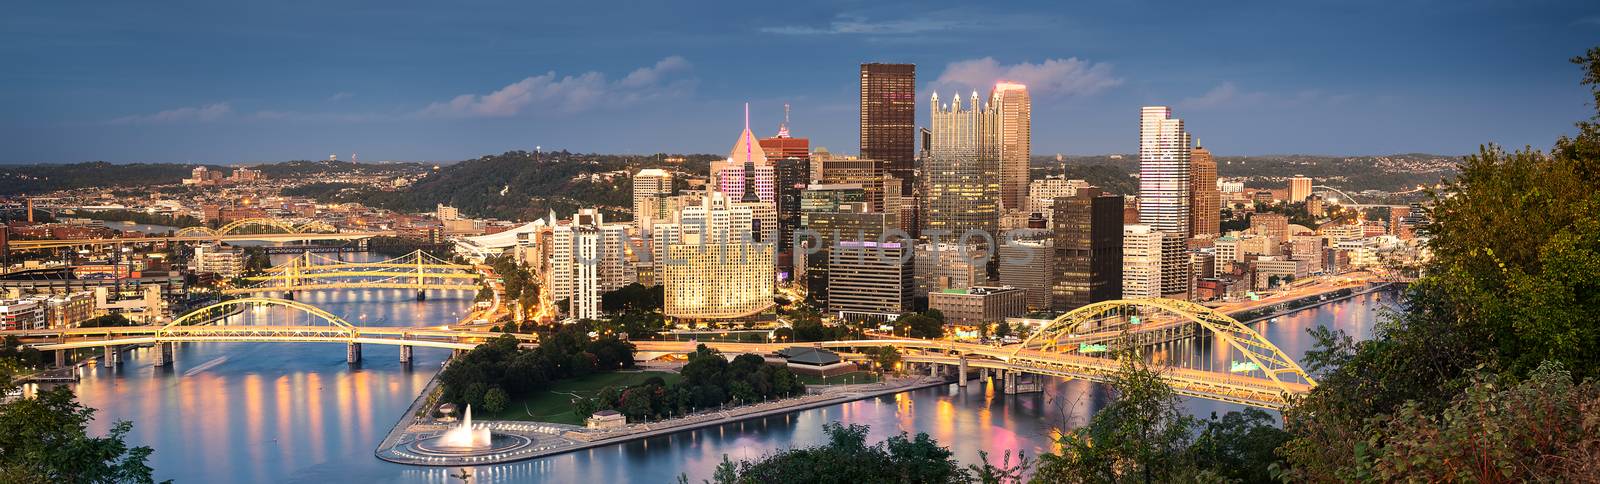 Pittsburgh skyline by night by ventdusud